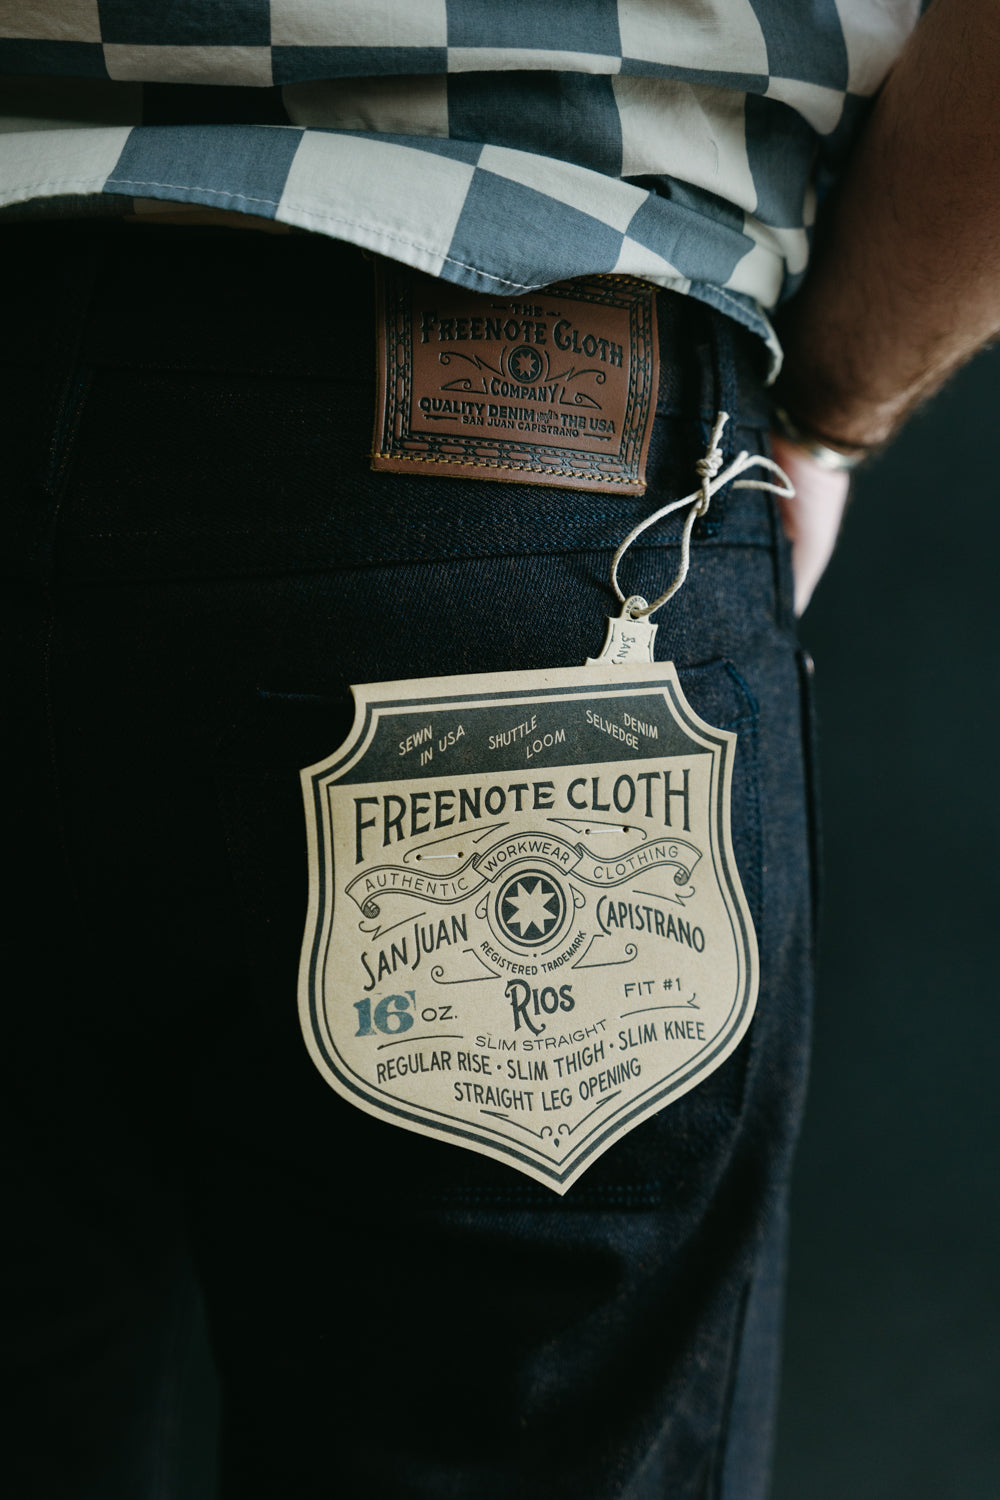 Freenote Cloth - Rios Slim Straight Broken Twill Denim Jeans - 14.25 o